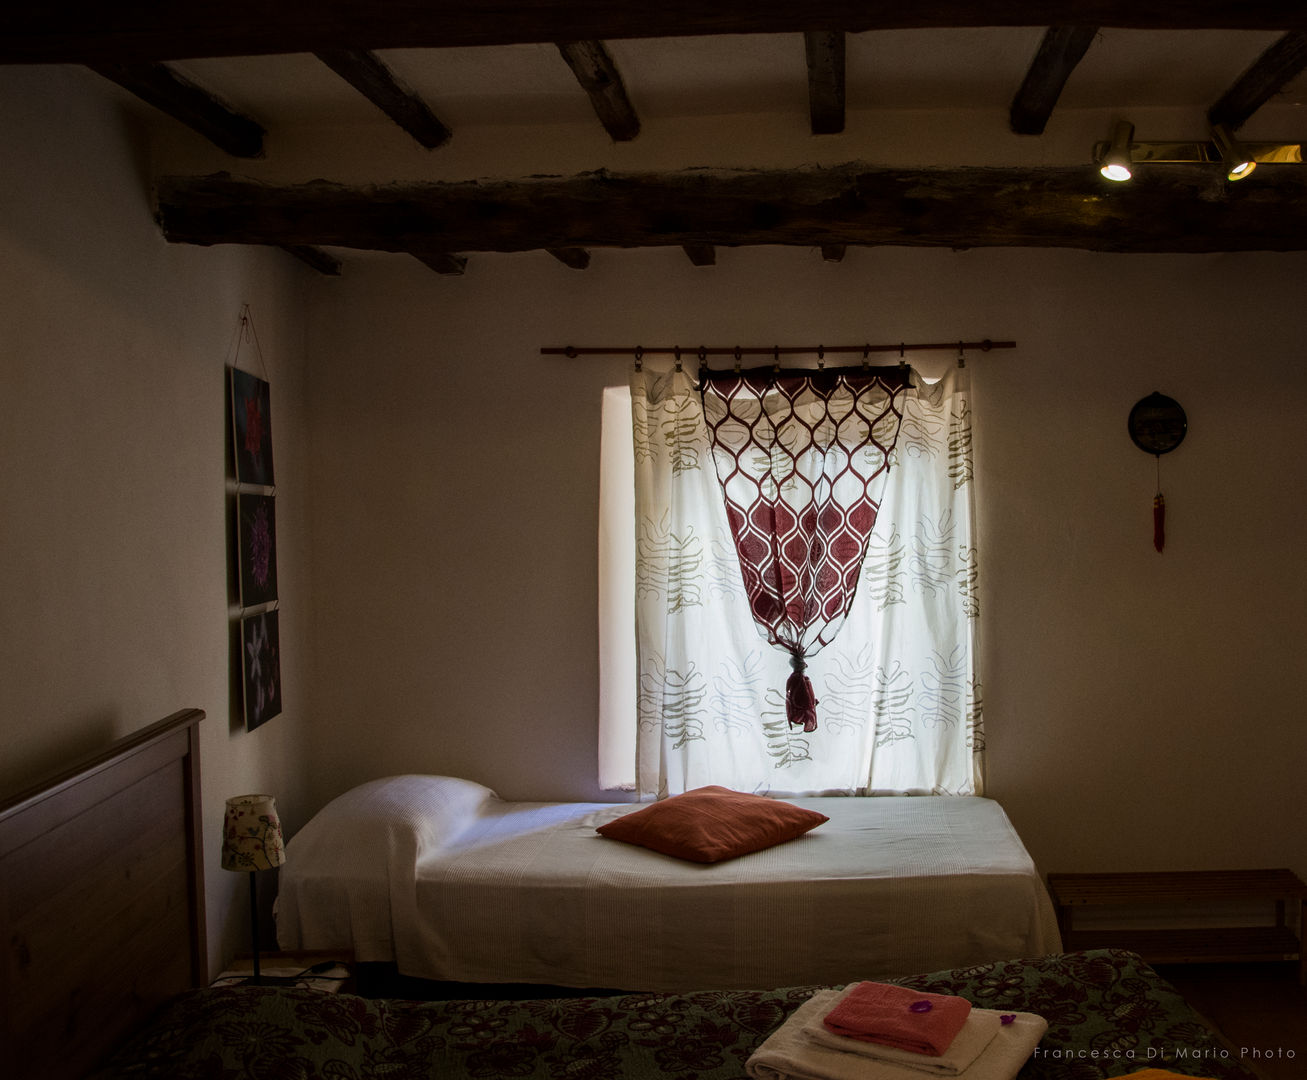 Casa Vacanze, Francesca Di Mario - Fotografo Francesca Di Mario - Fotografo Rustic style bedroom